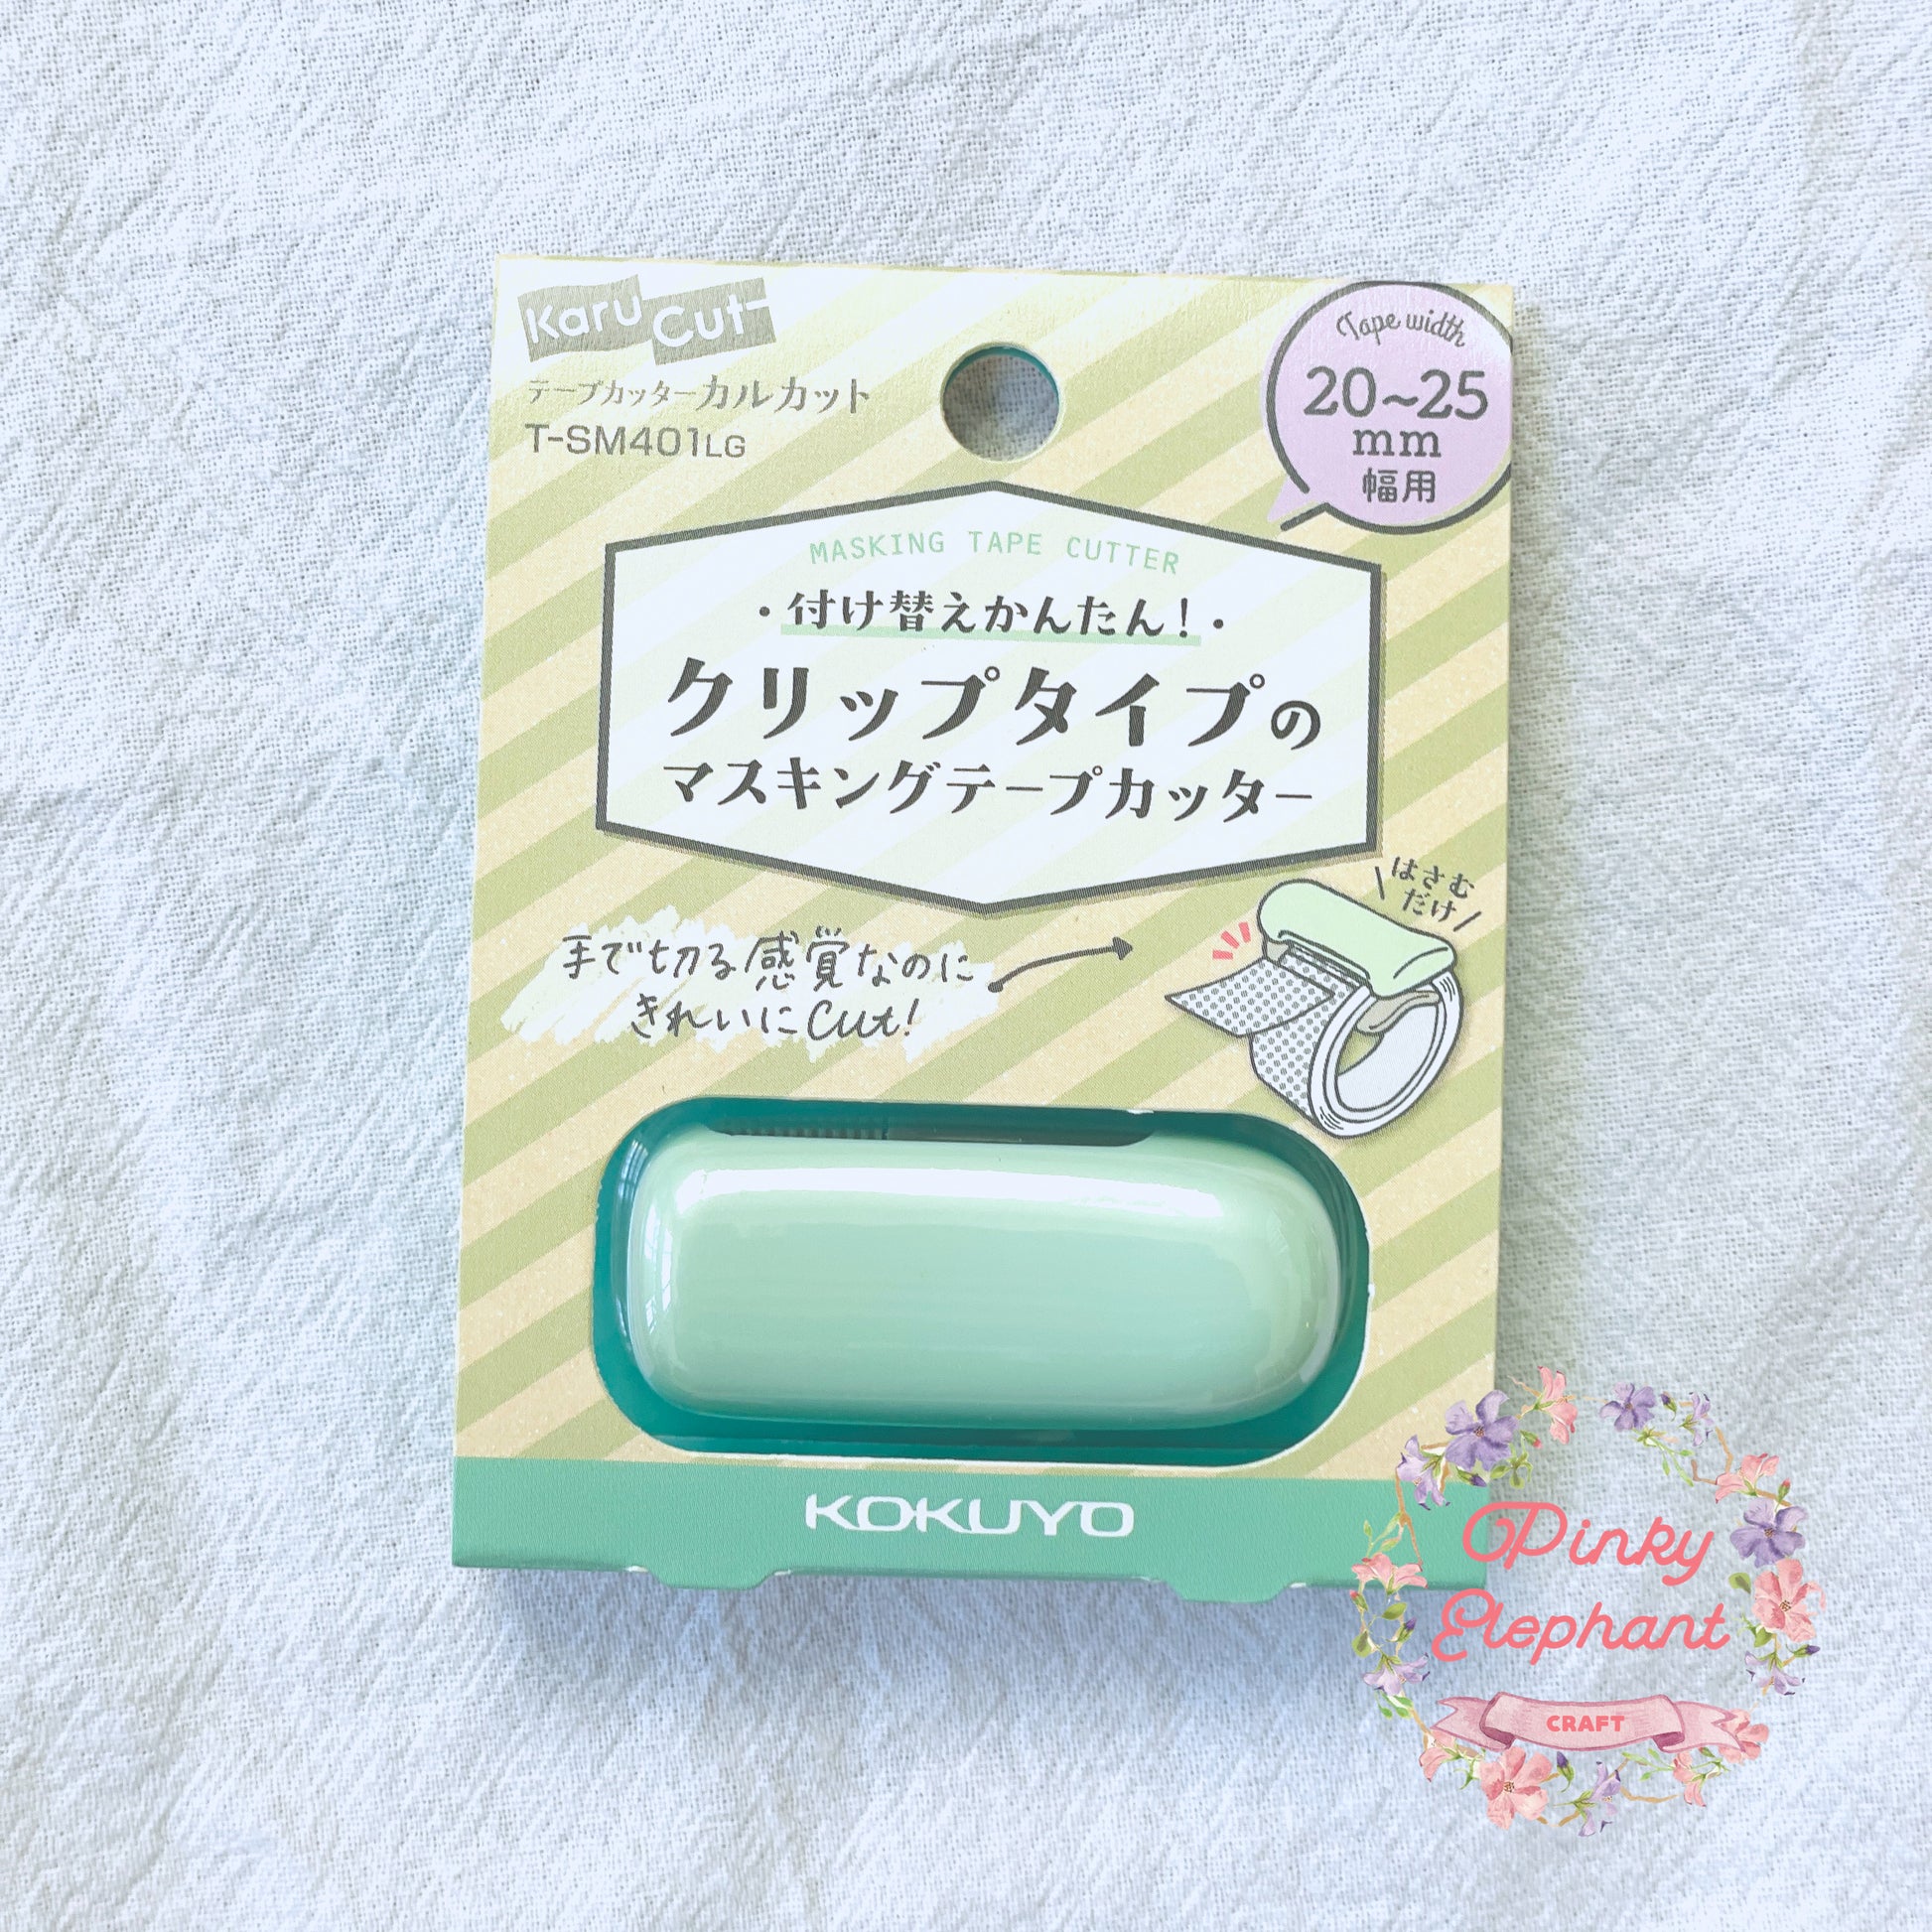 Washi Tape Cutter Pastel Green Kokuyo Karu Cut (for 20 - 25mm)